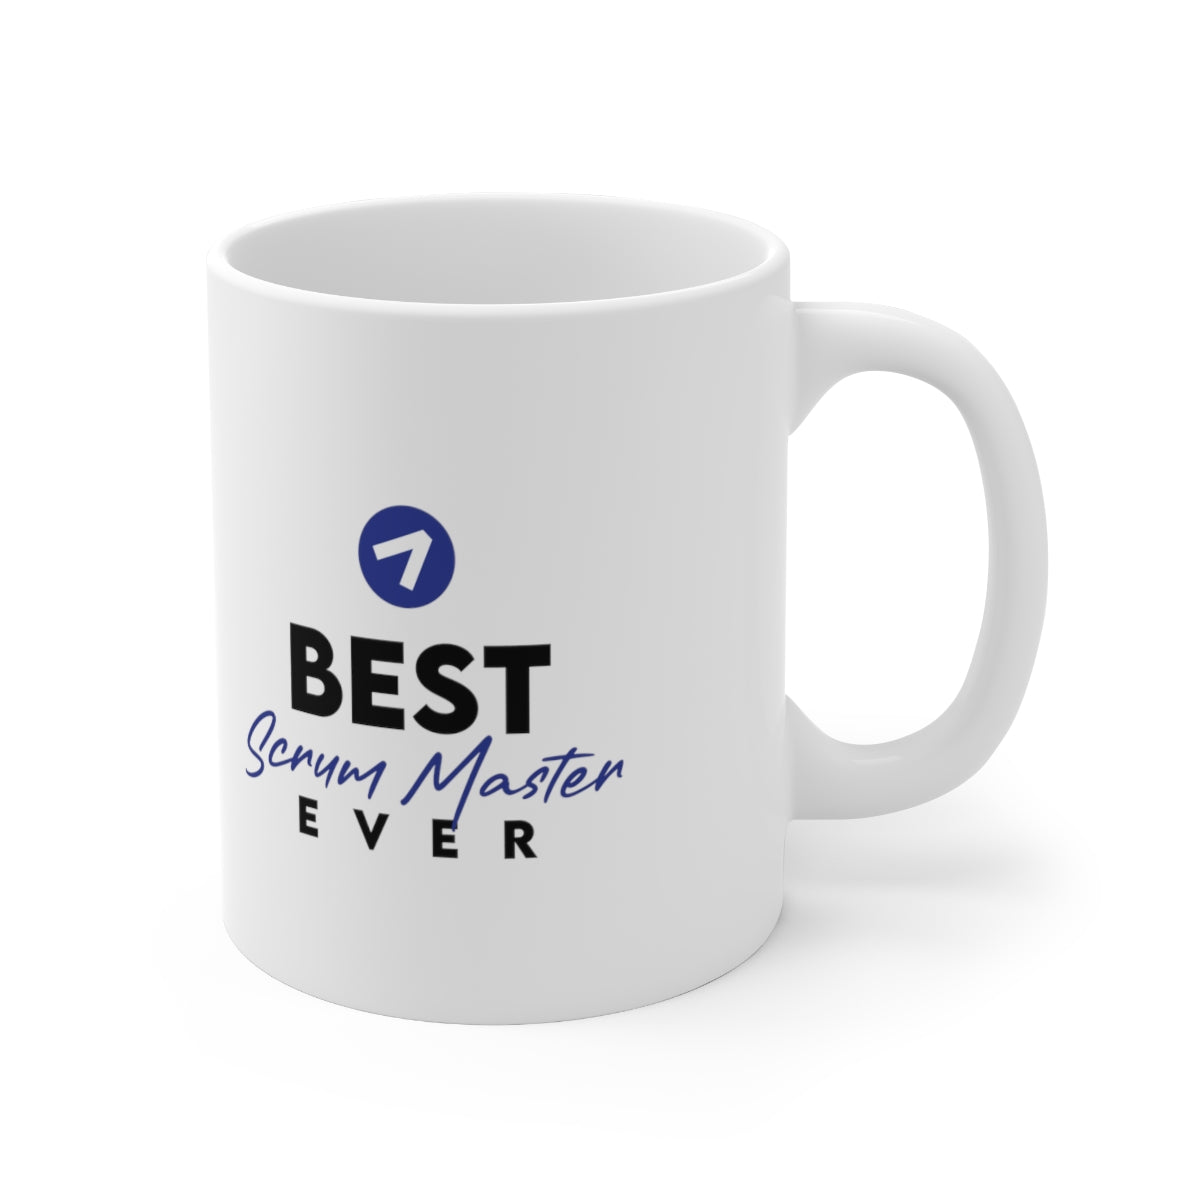 Best Scrum Master ever - Dark blue - Ceramic Mug 11oz